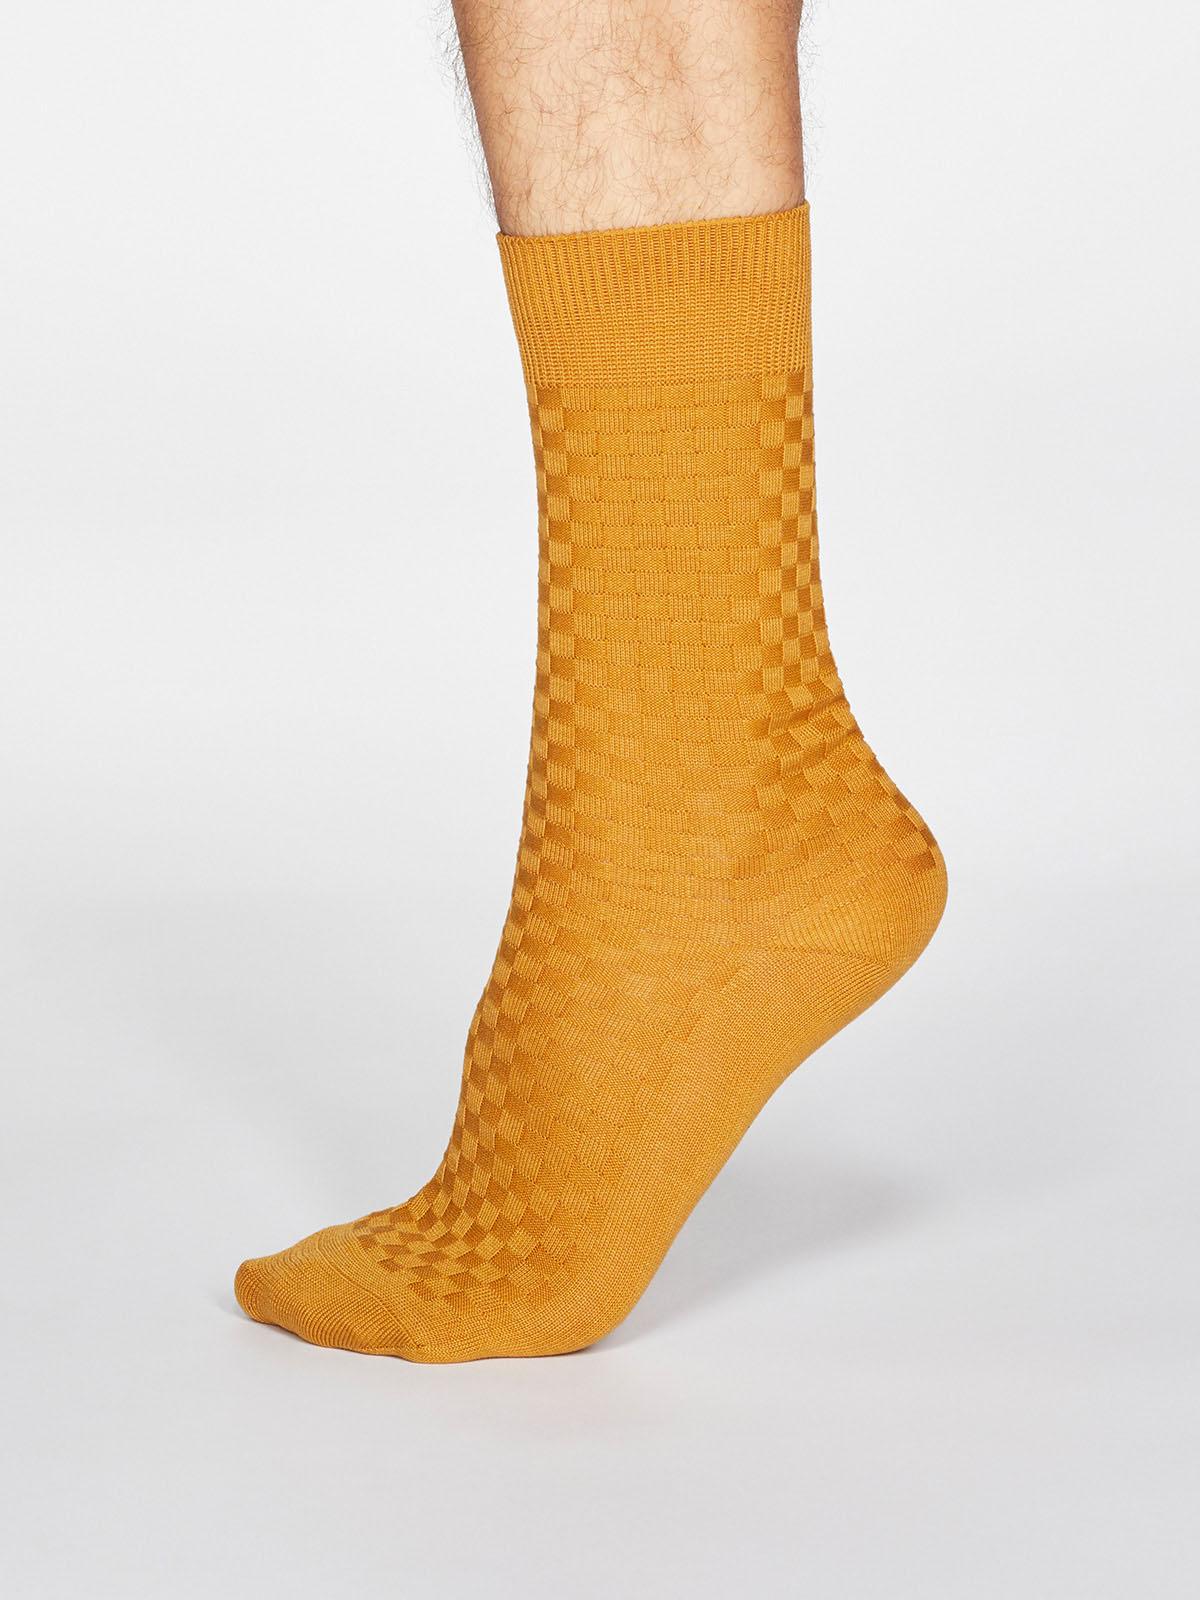 Cameron Organic Cotton Suit Socks - Mustard Yellow - Thought Clothing UK